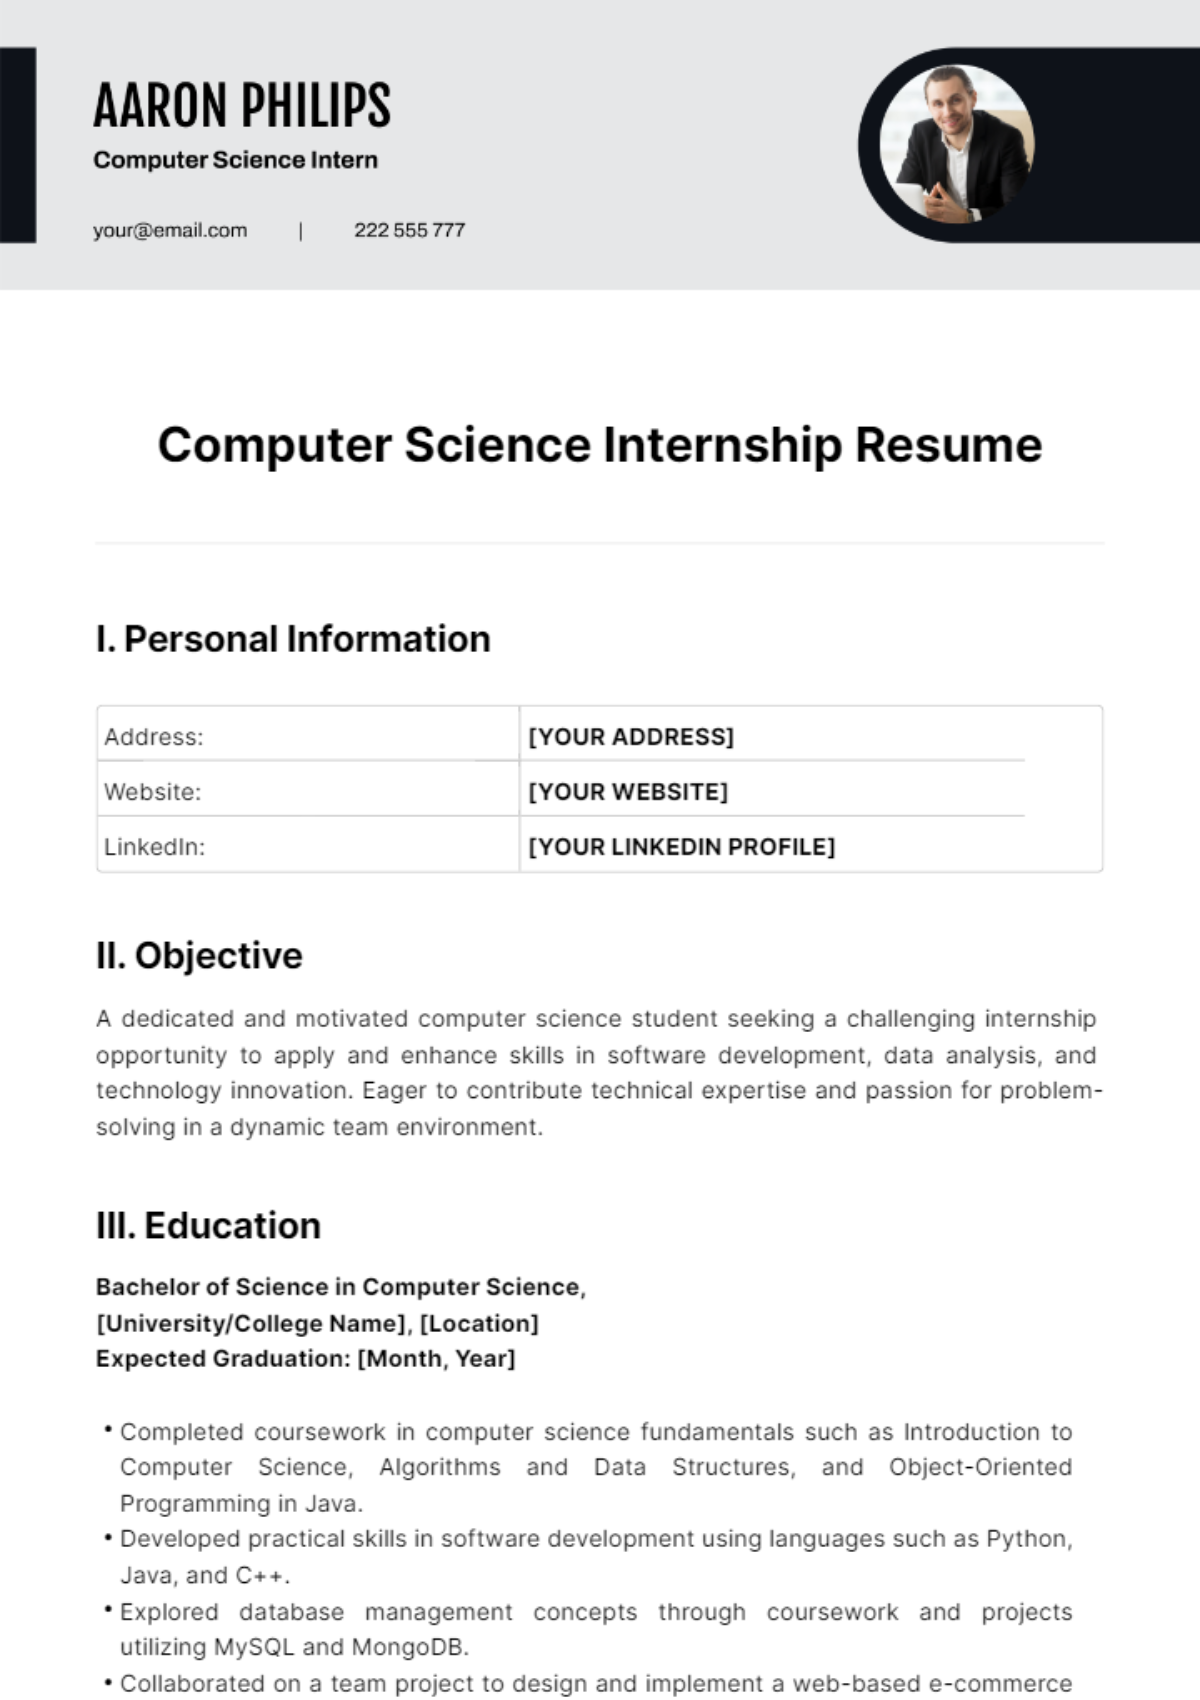 Computer Science Internship Resume Template